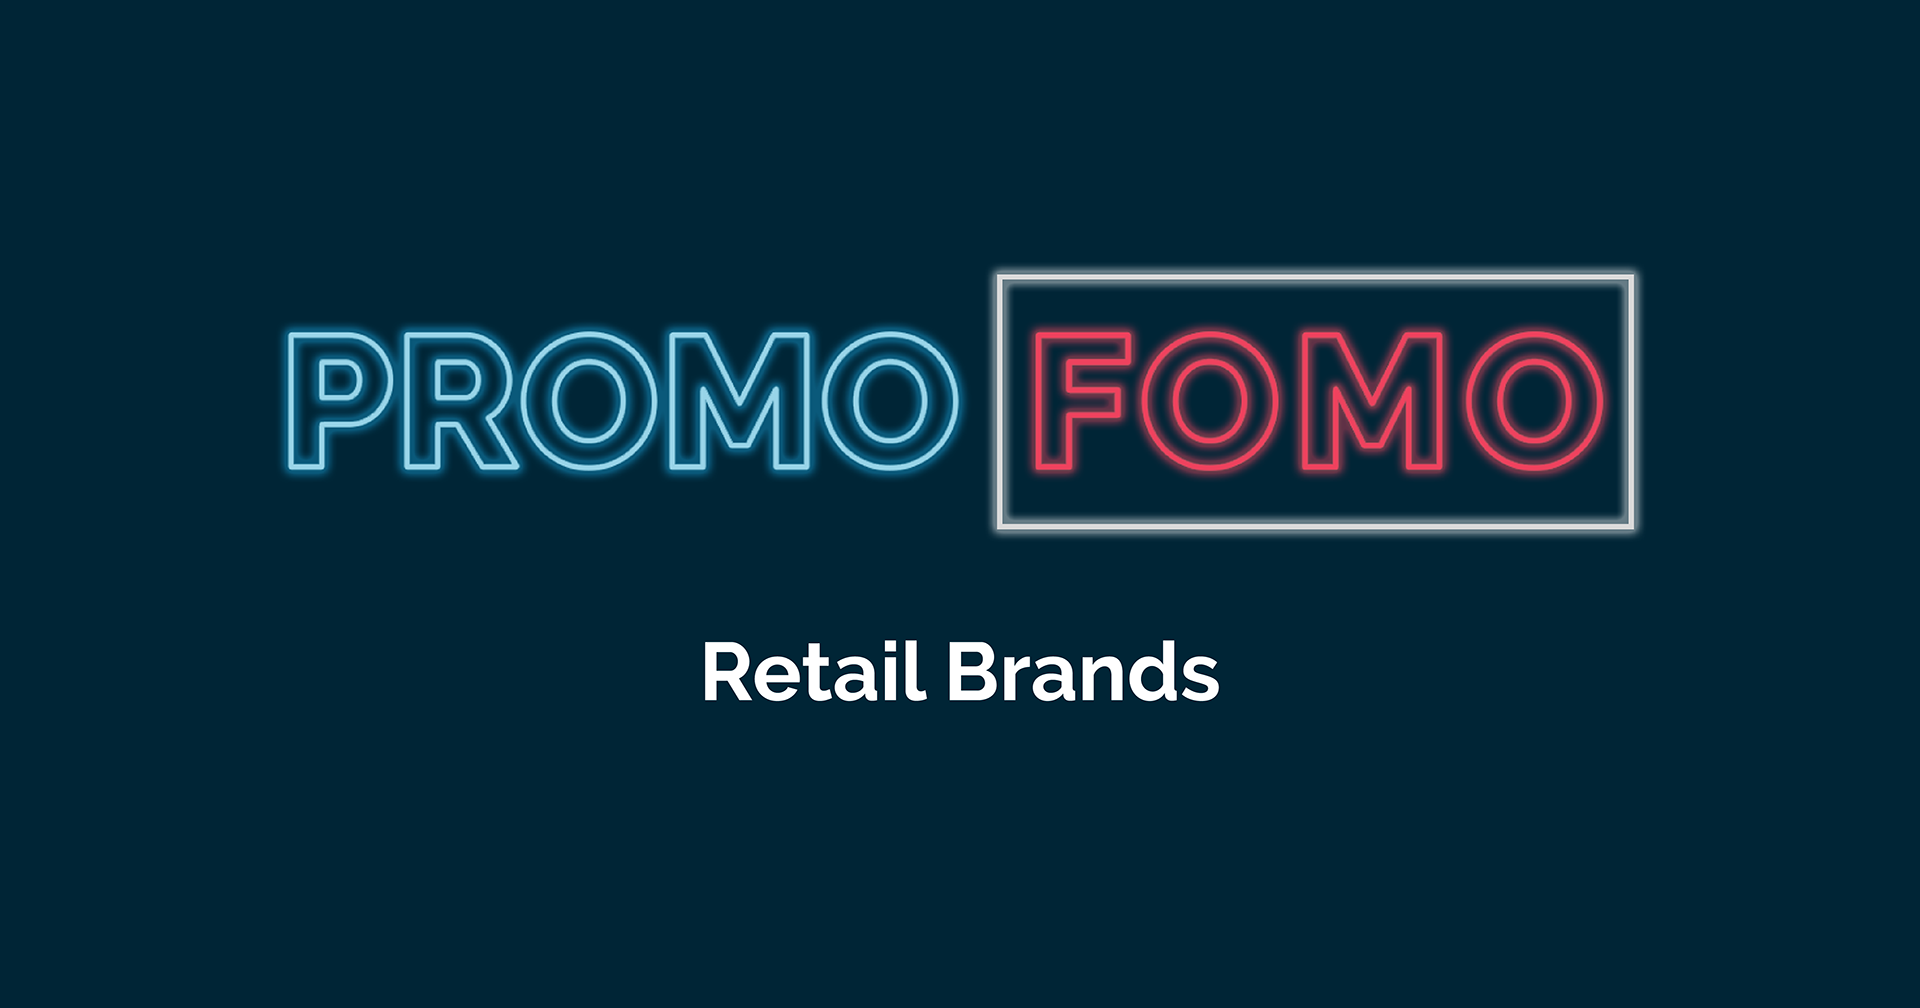 Promo FOMO Retail Brands